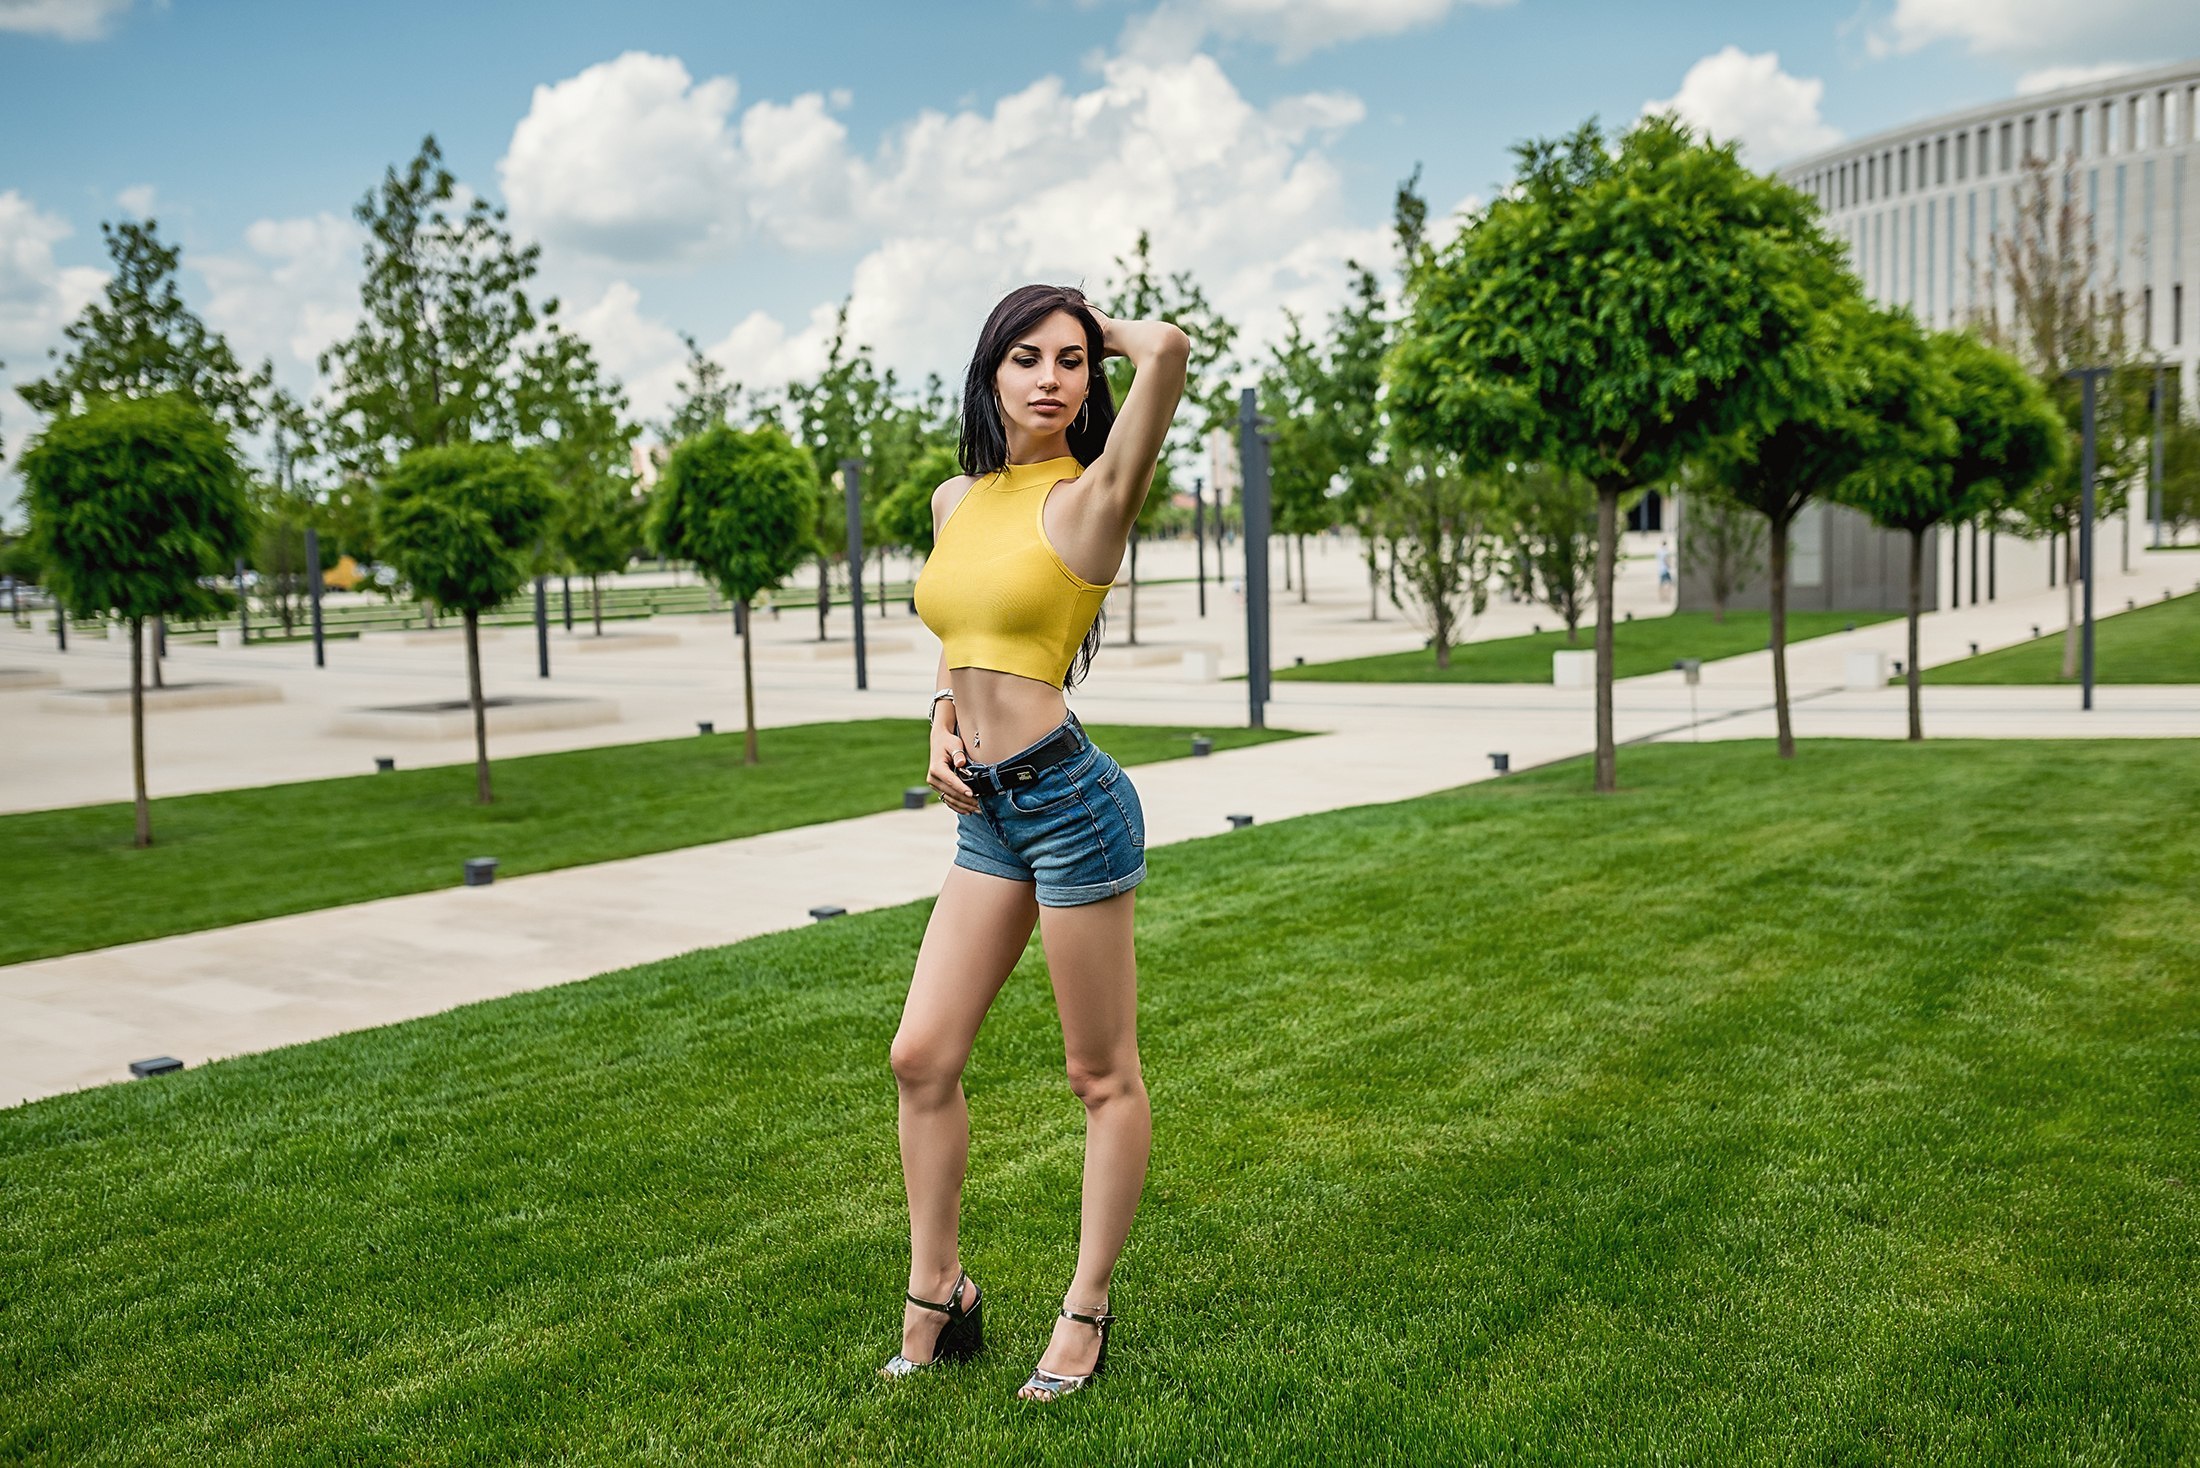 Image: Lioka Grechanova, pose, figure, slim, standing, lawn, grass, park